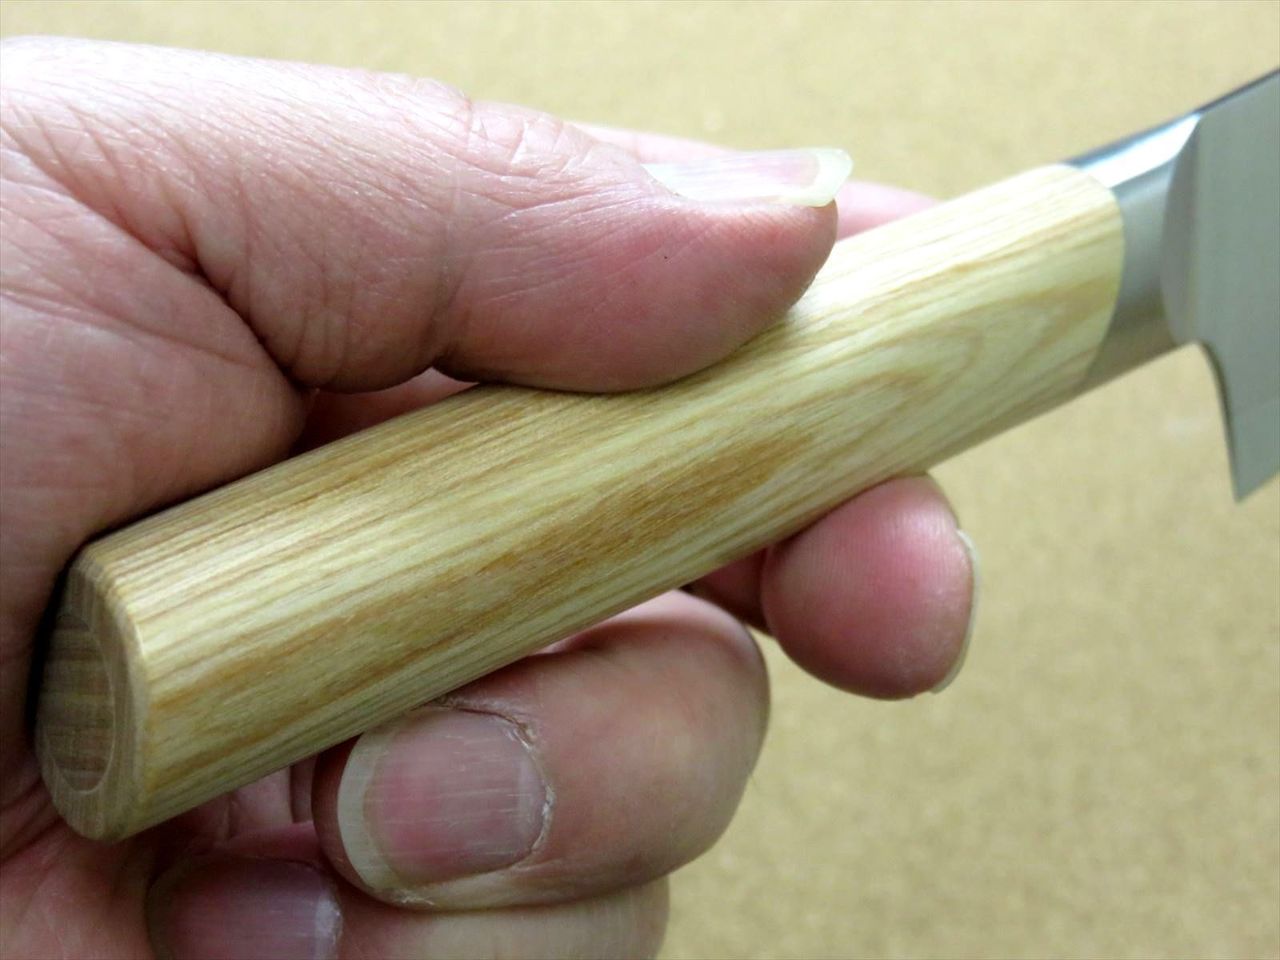 Signature 5-inch Santoku Knife – Aikido Steel